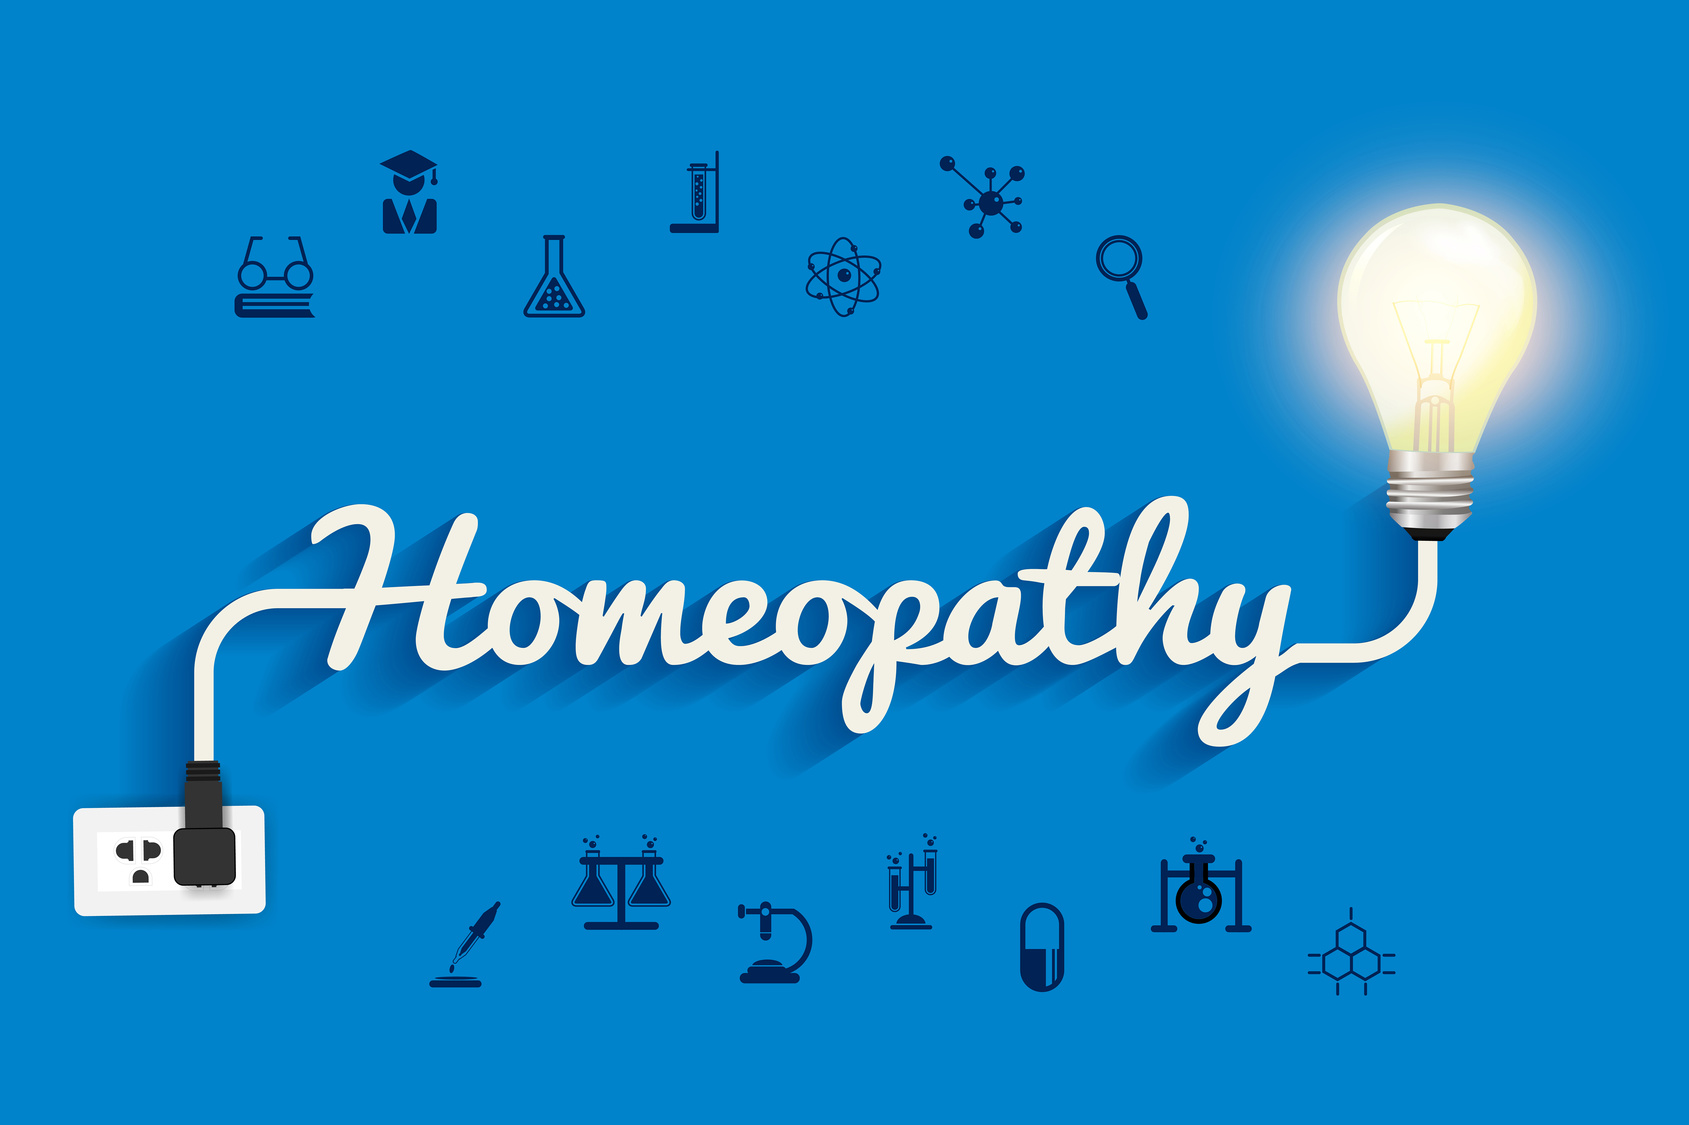 varwwwhtmlwp-contentuploads201602metodo-homeopatia.jpg